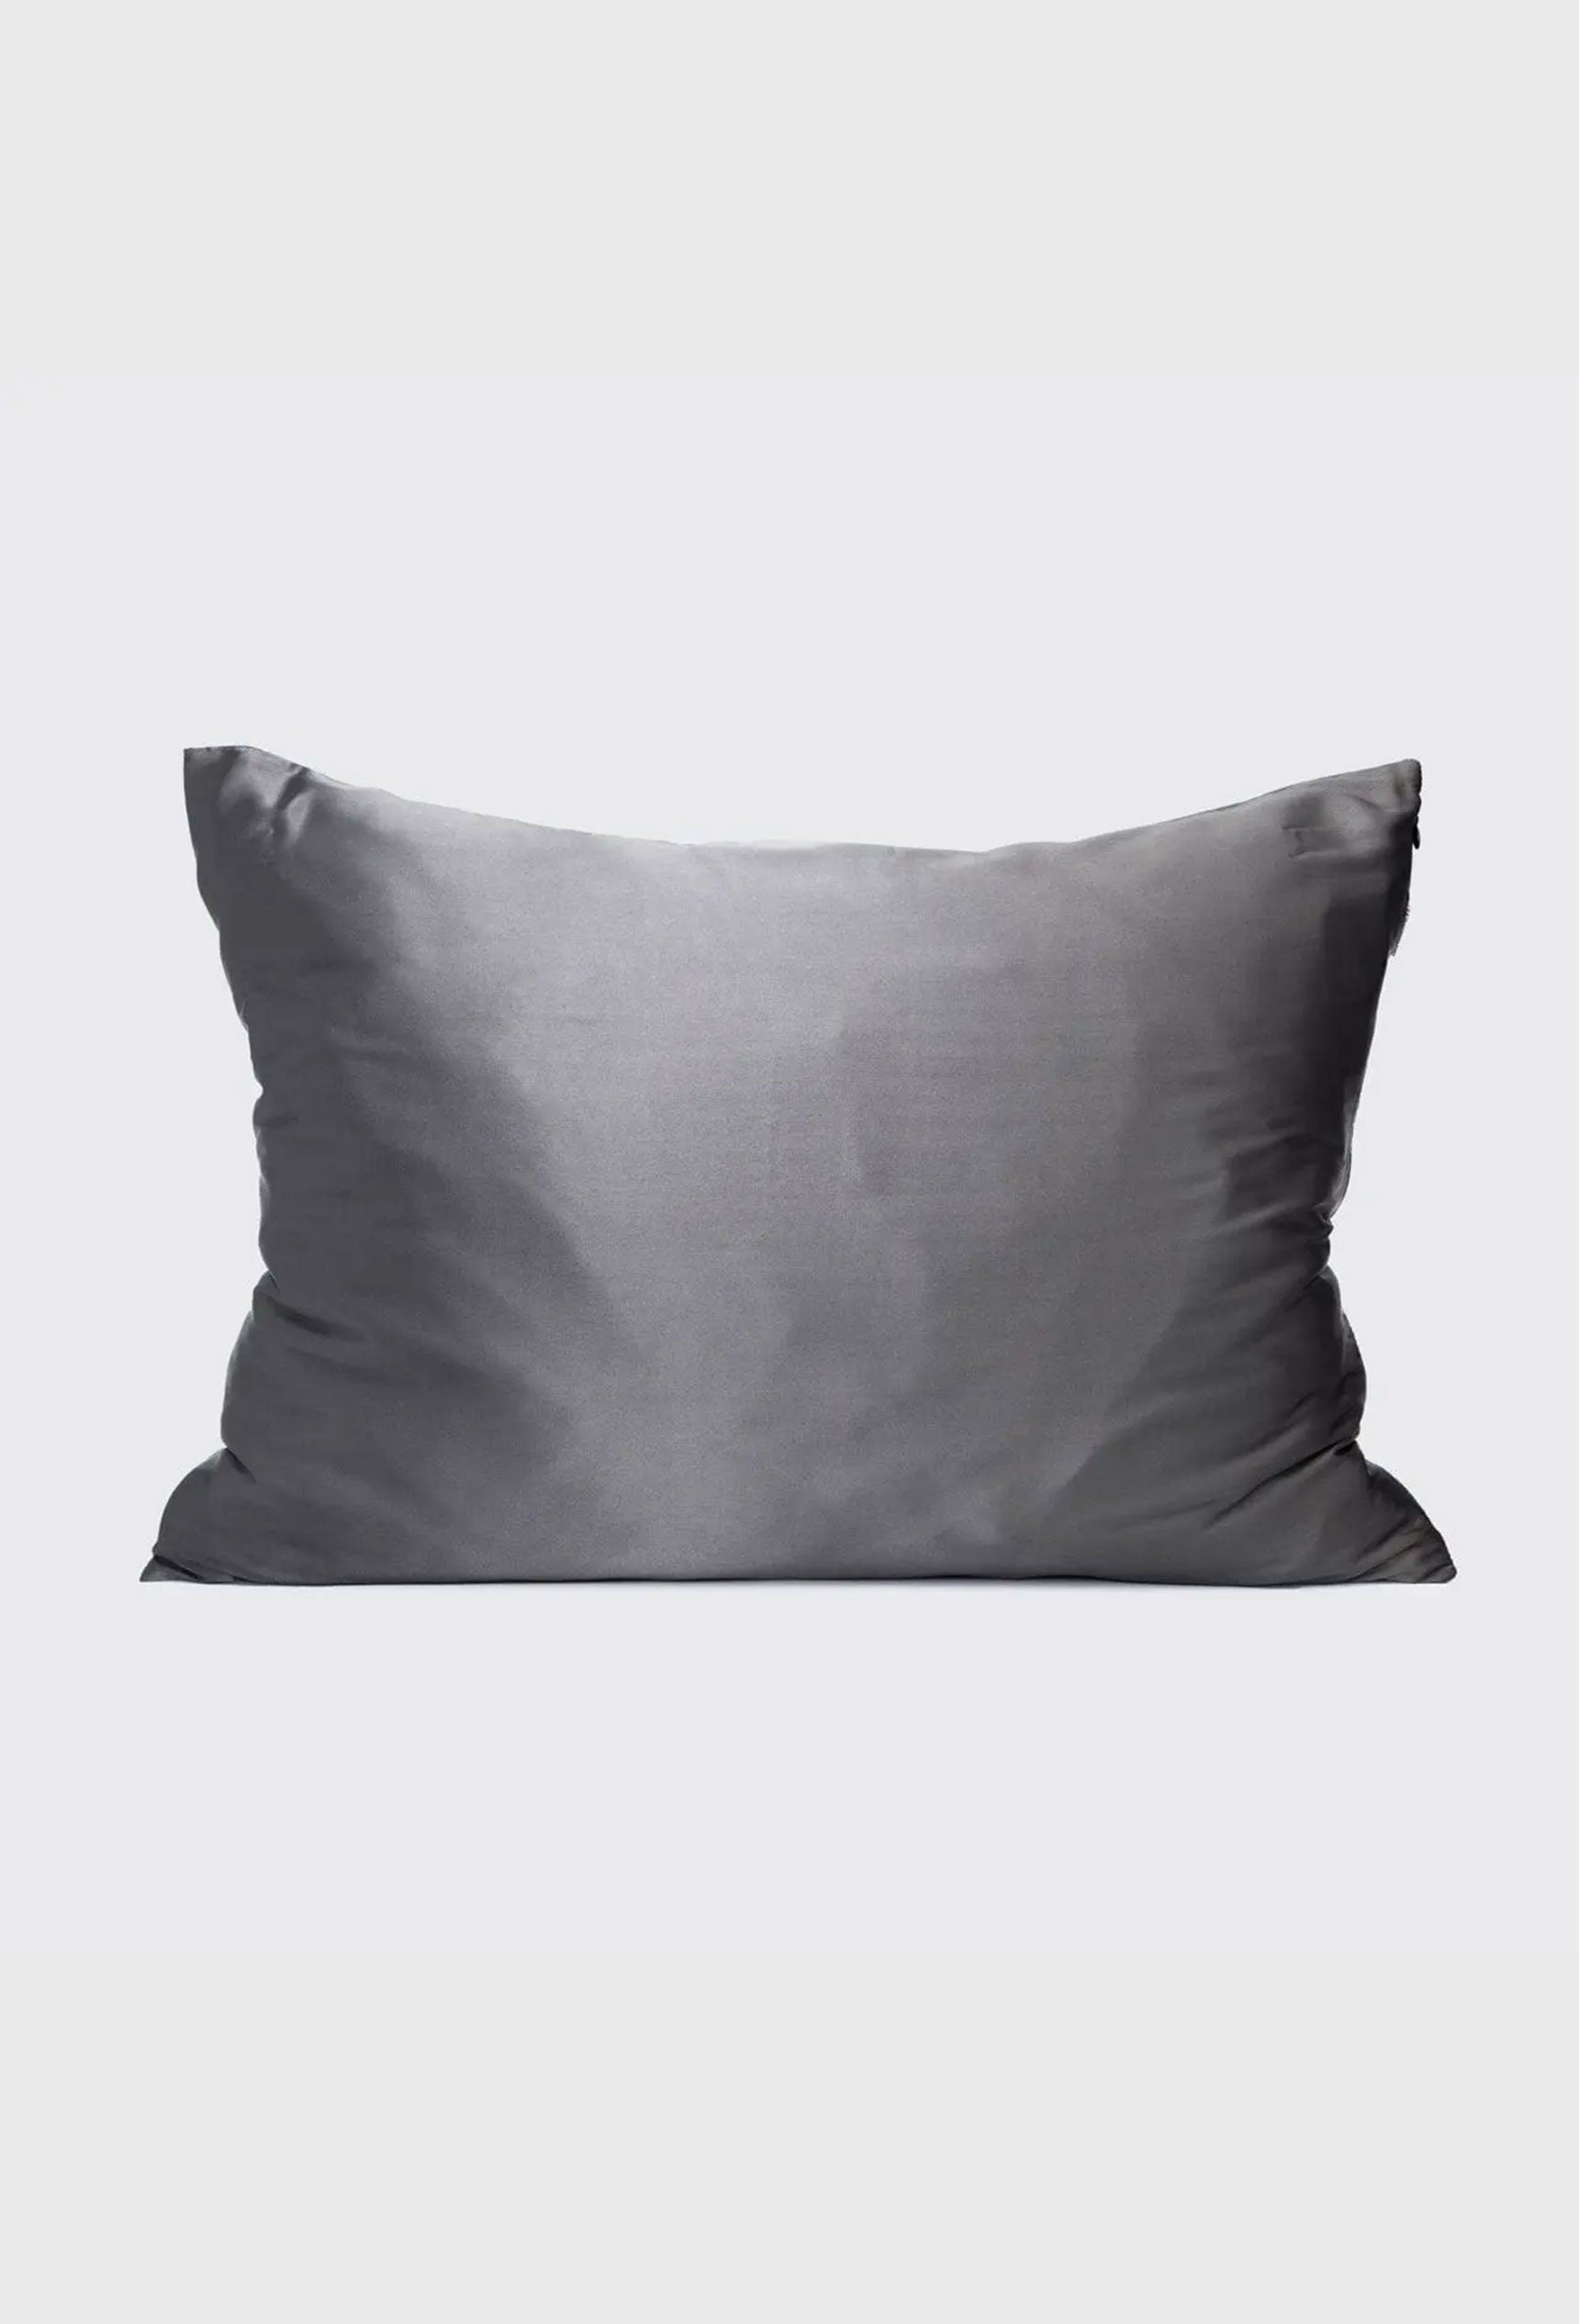 Kitsch Satin Pillowcase in Charcoal, satin pillowcase